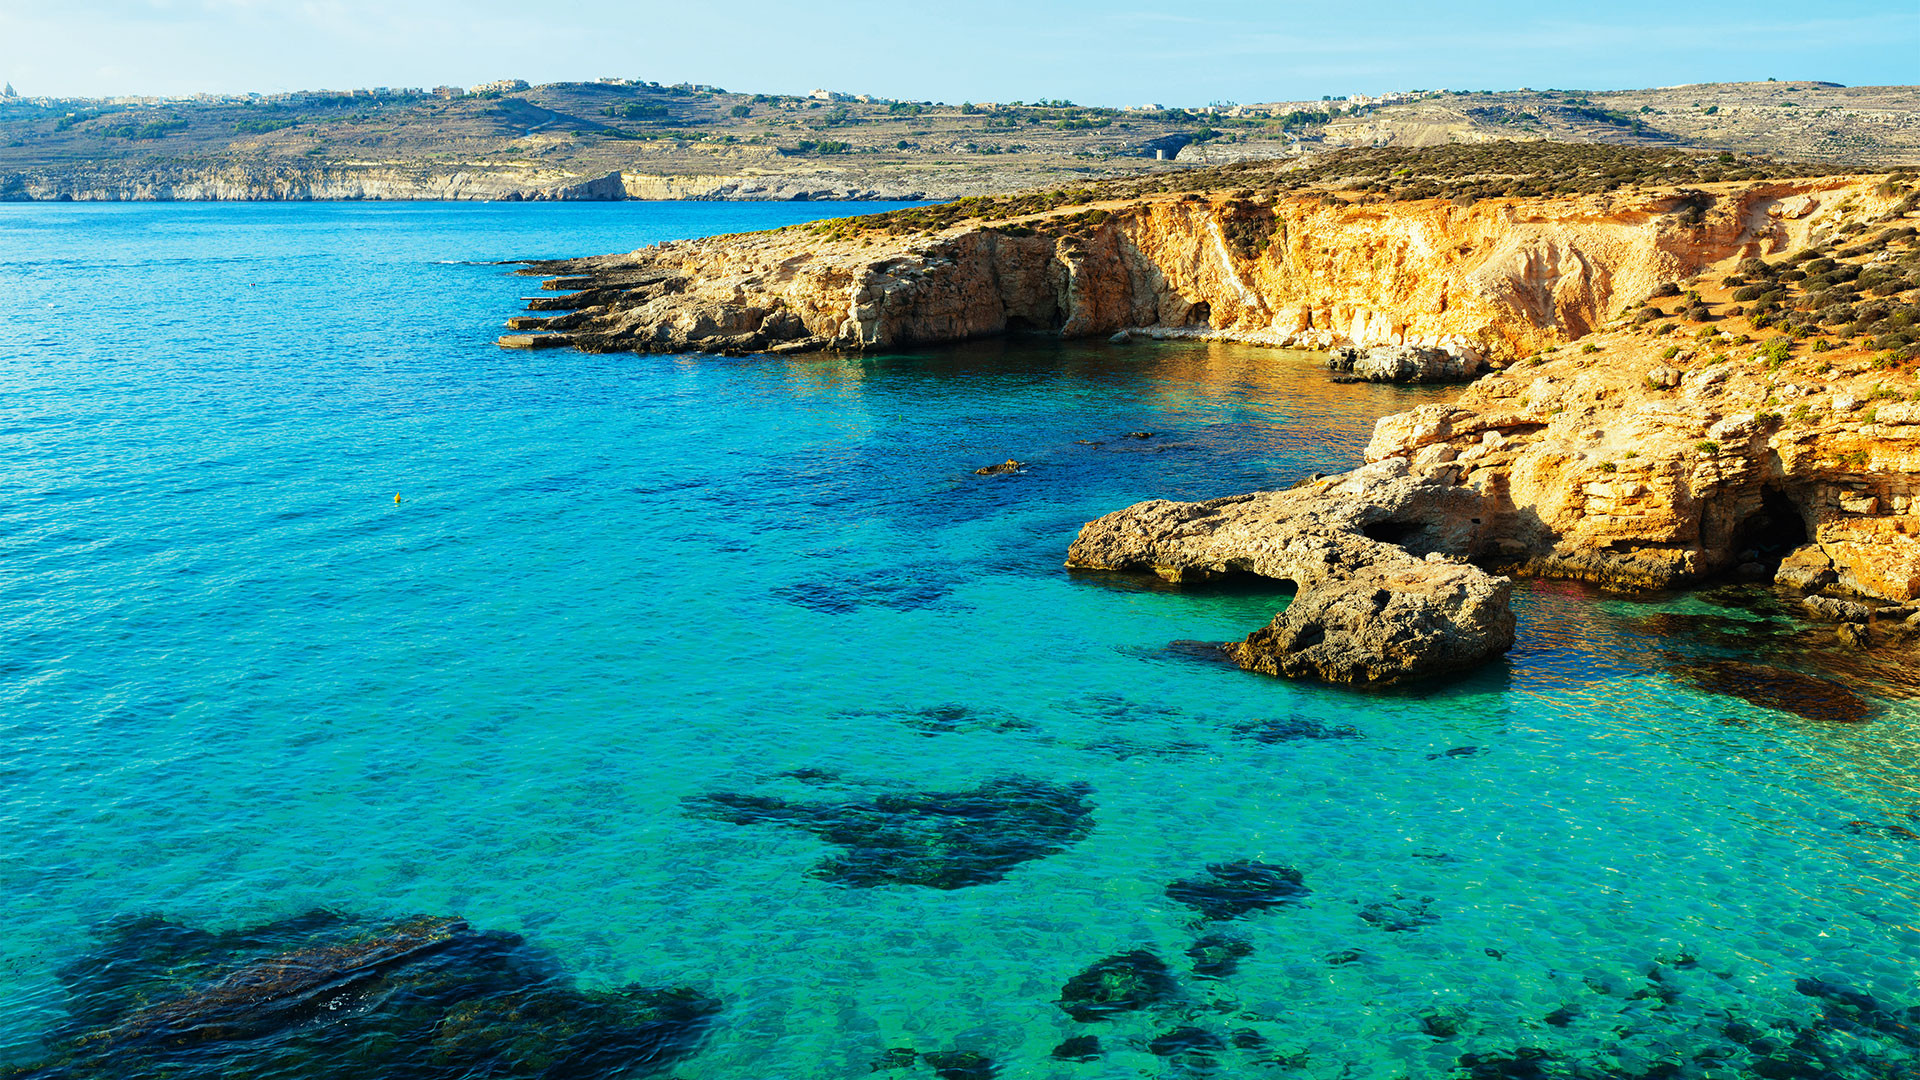 Photograph of Comino Island, Blue Lagoon in Malta